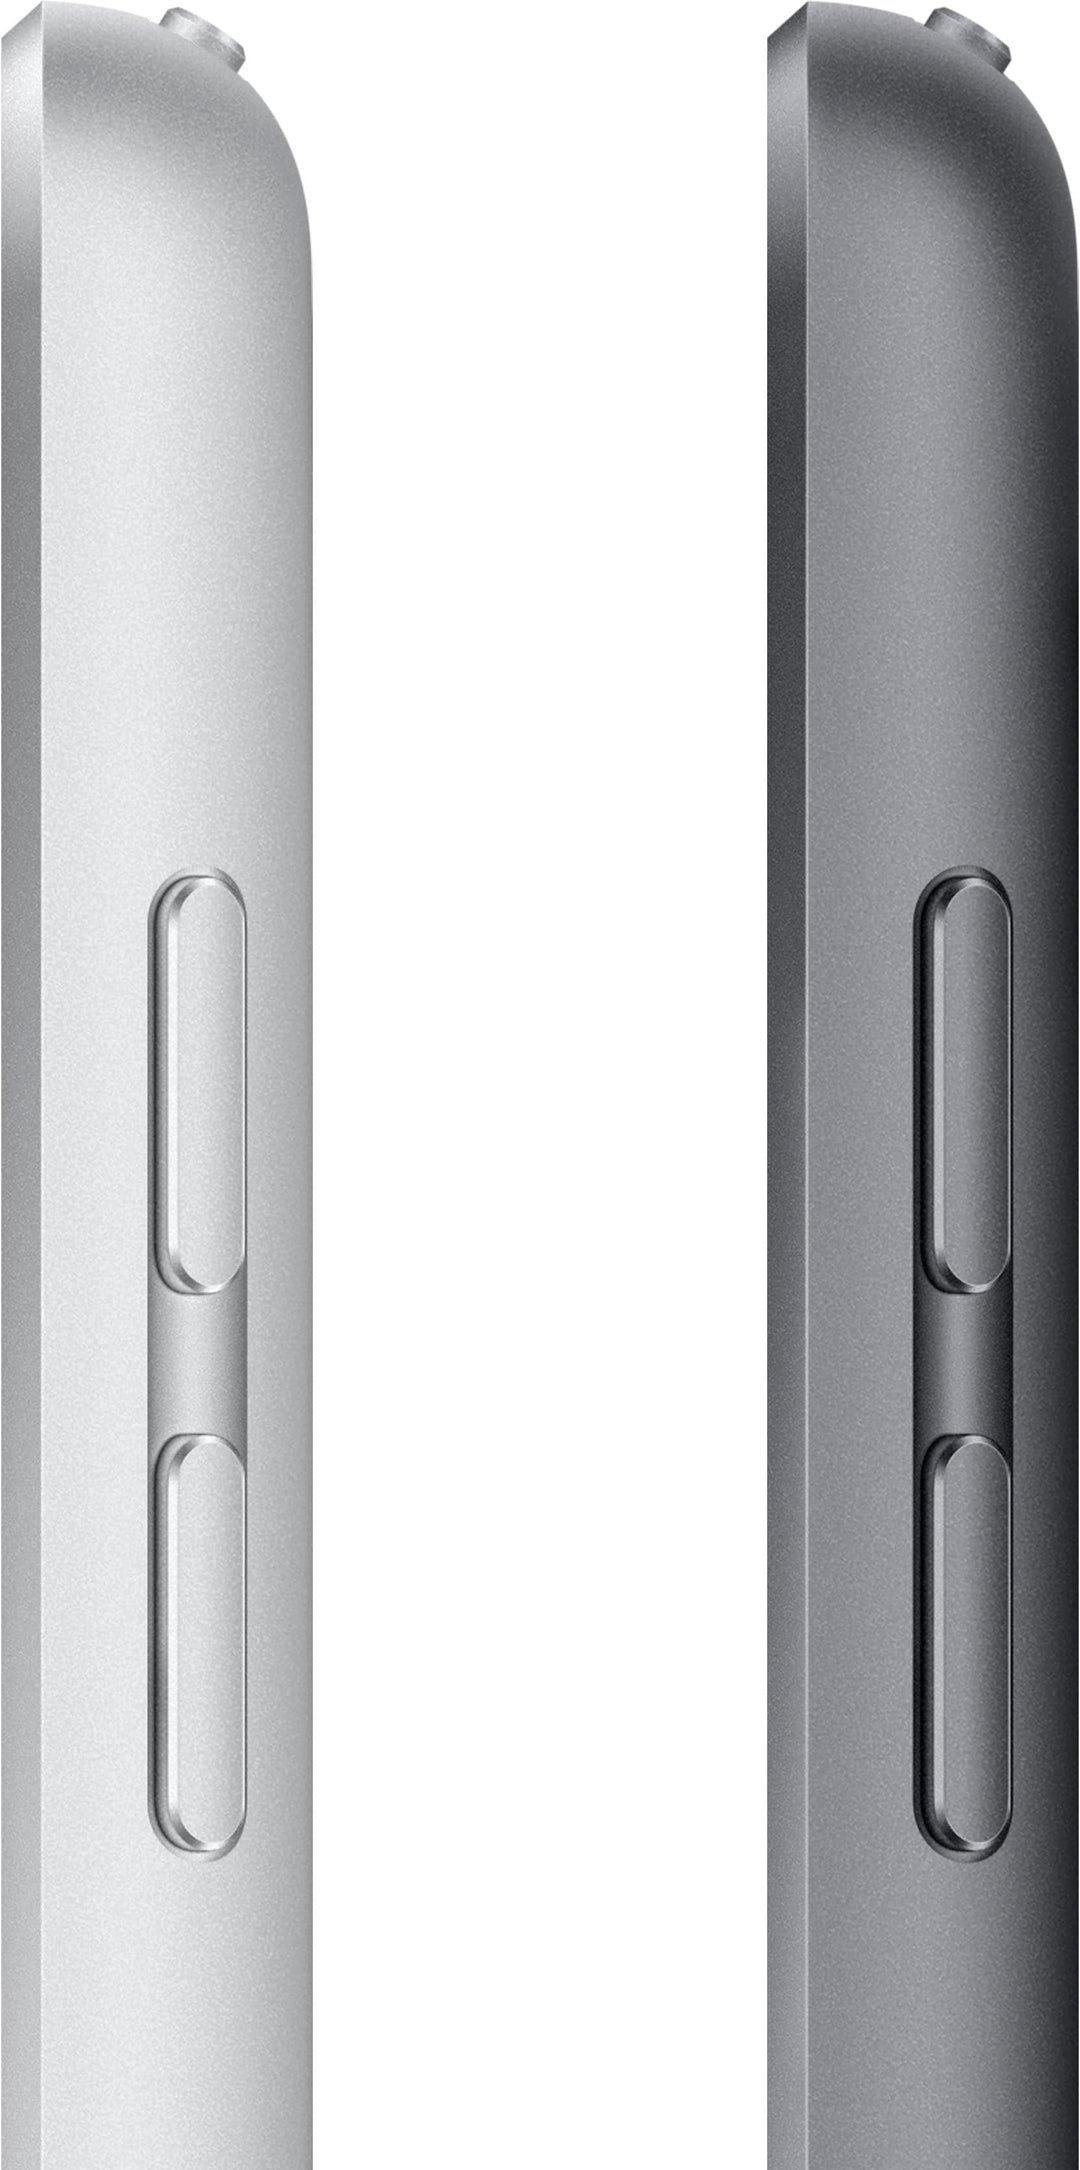 Apple - 10.2-Inch iPad (Latest Model) with Wi-Fi - 256GB - Silver_3